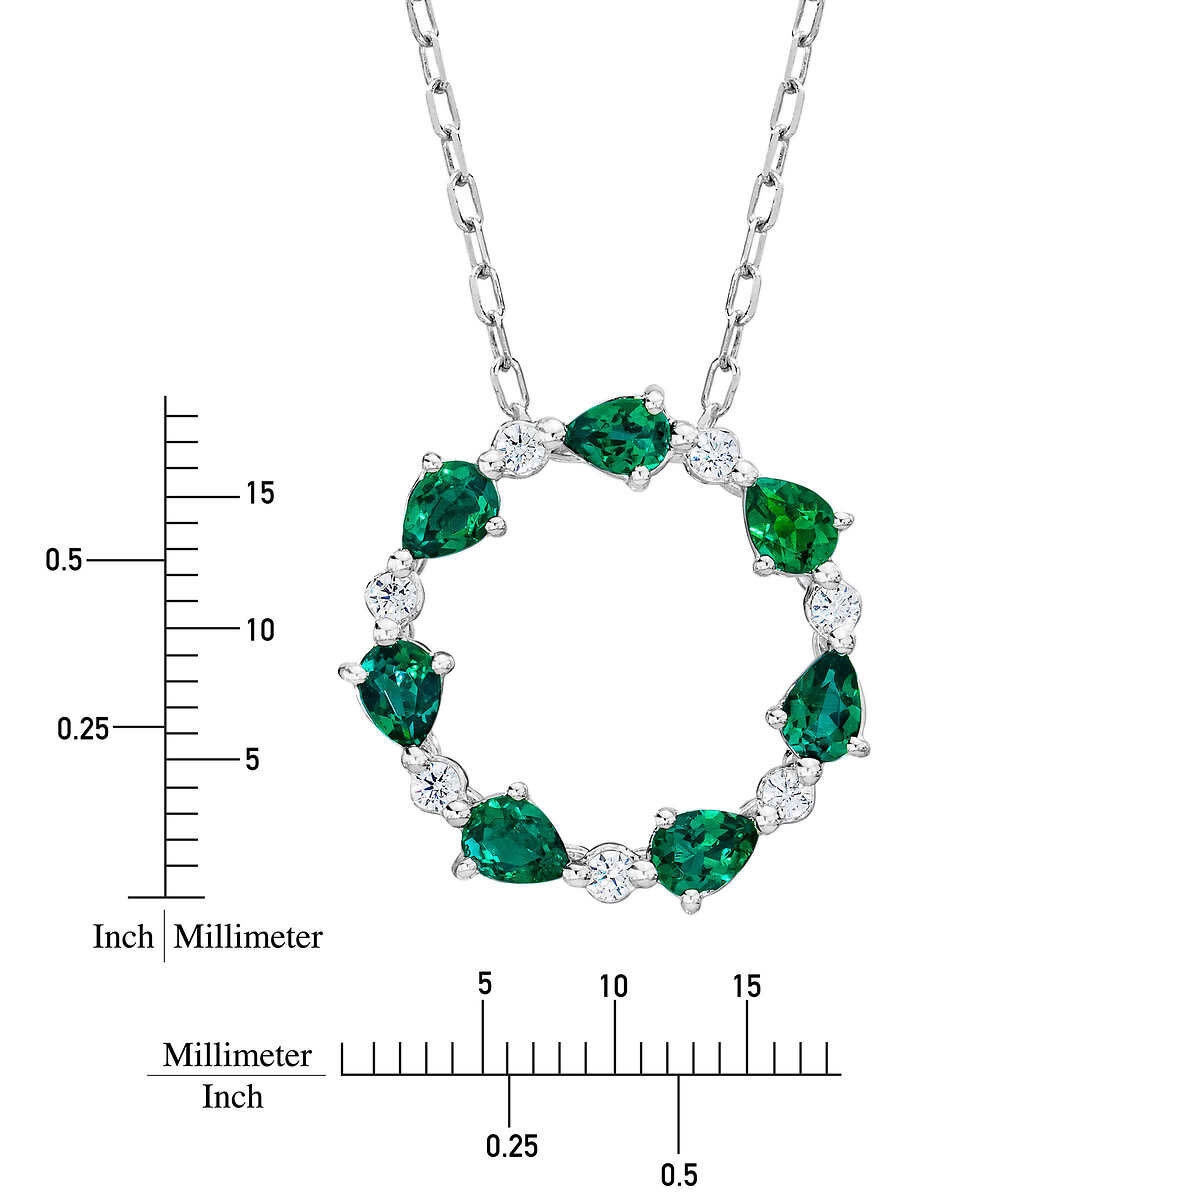 Pear Cut Lab Emerald & 0.13ctw Diamond Pendant, 14ct White Gold